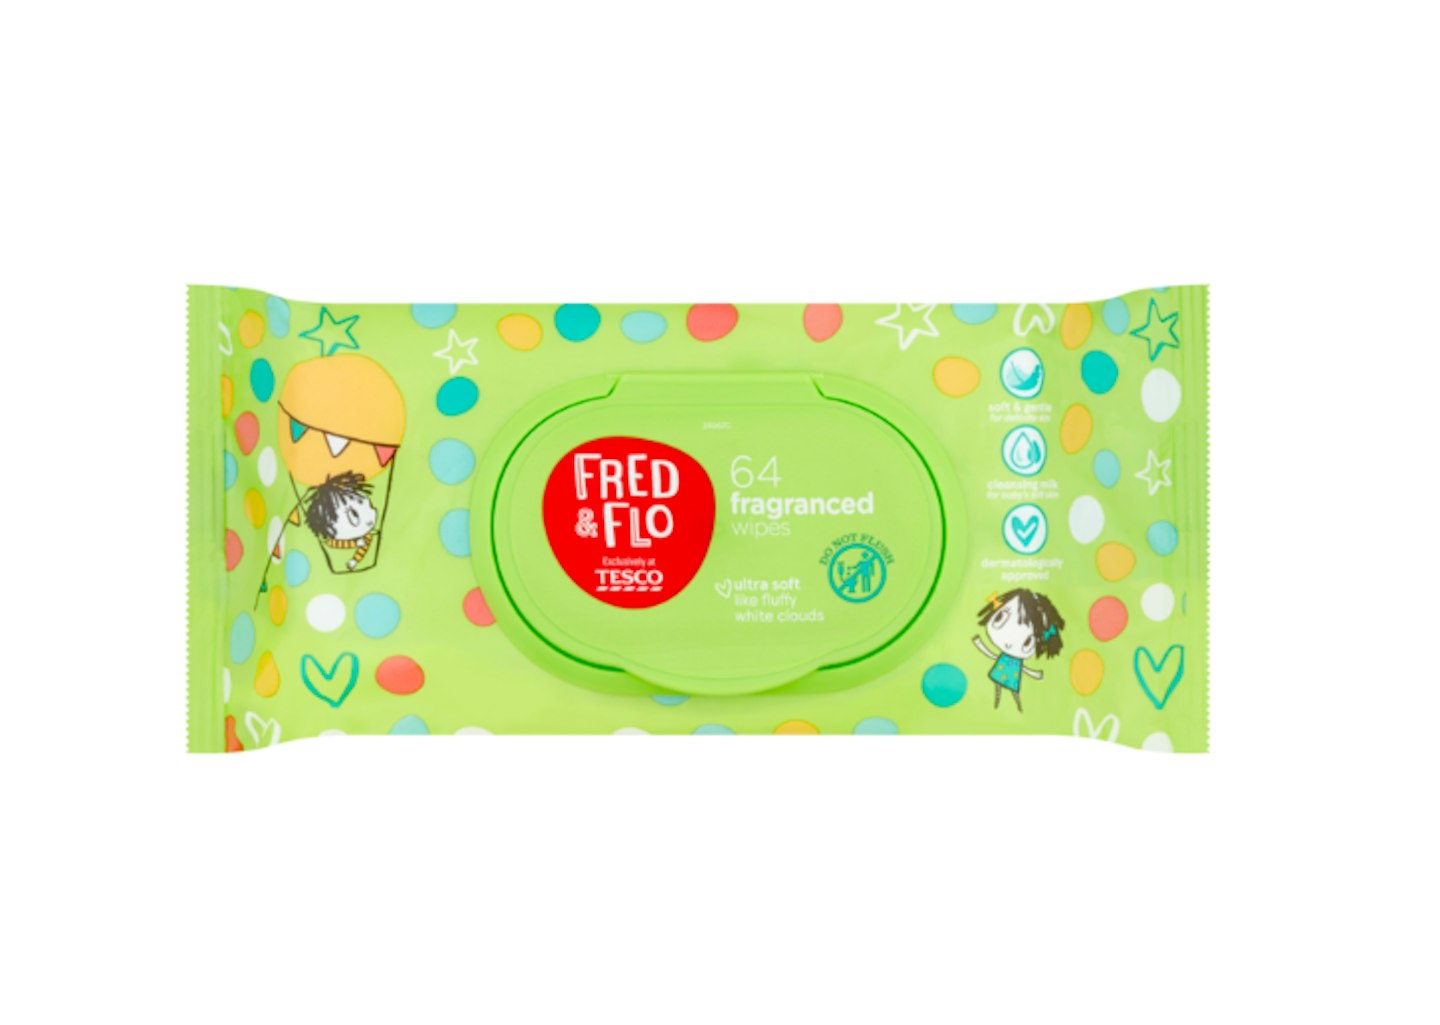 Fred & Flo Fragranced Wipes